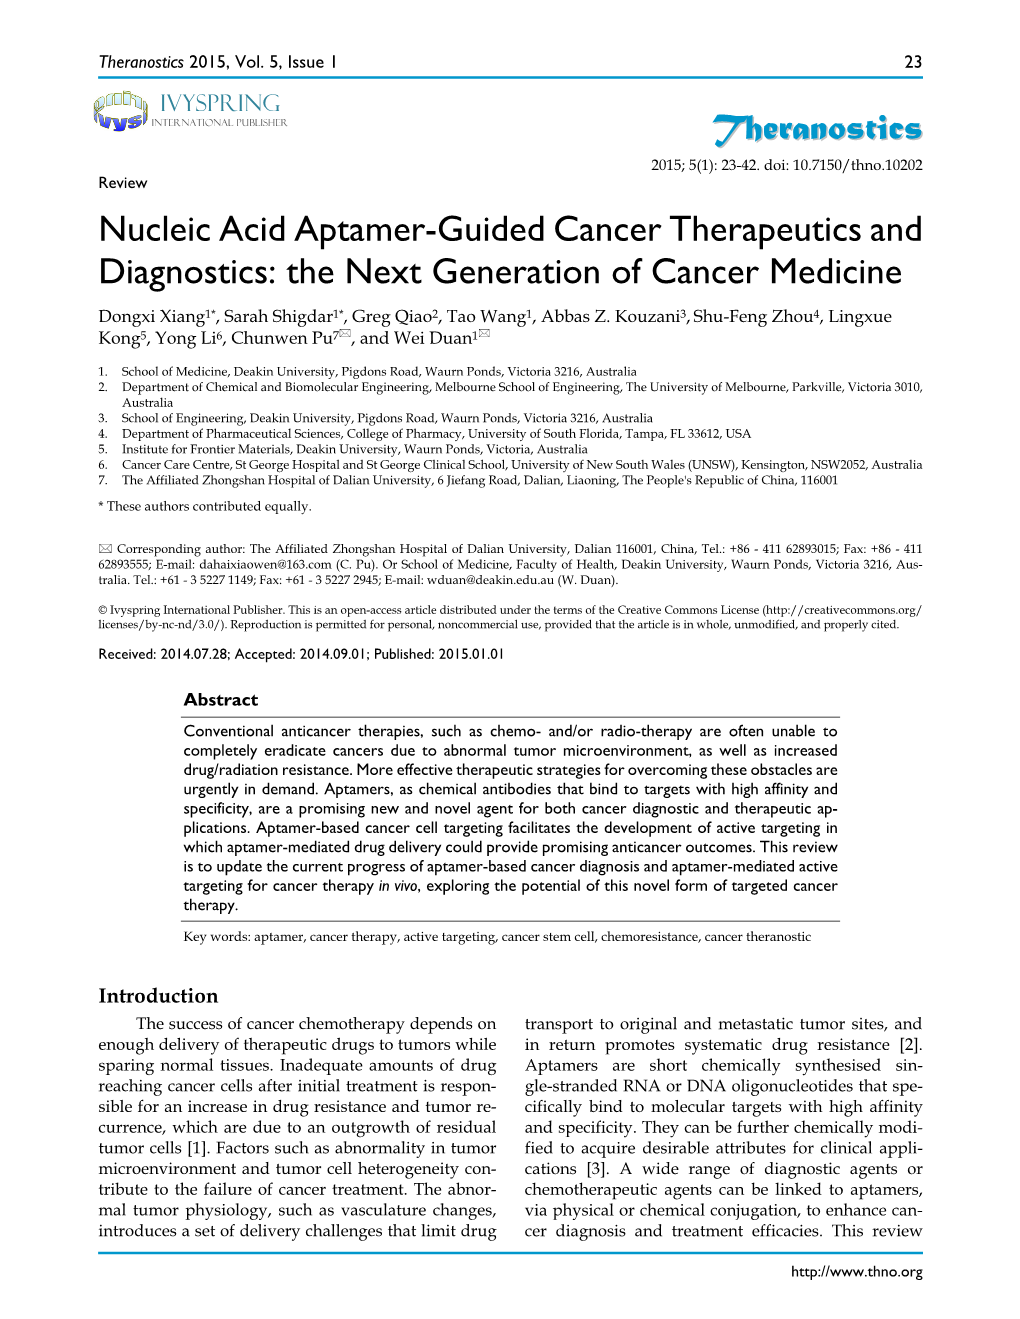 Nucleic Acid Aptamer-Guided Cancer Therapeutics and Diagnostics: The